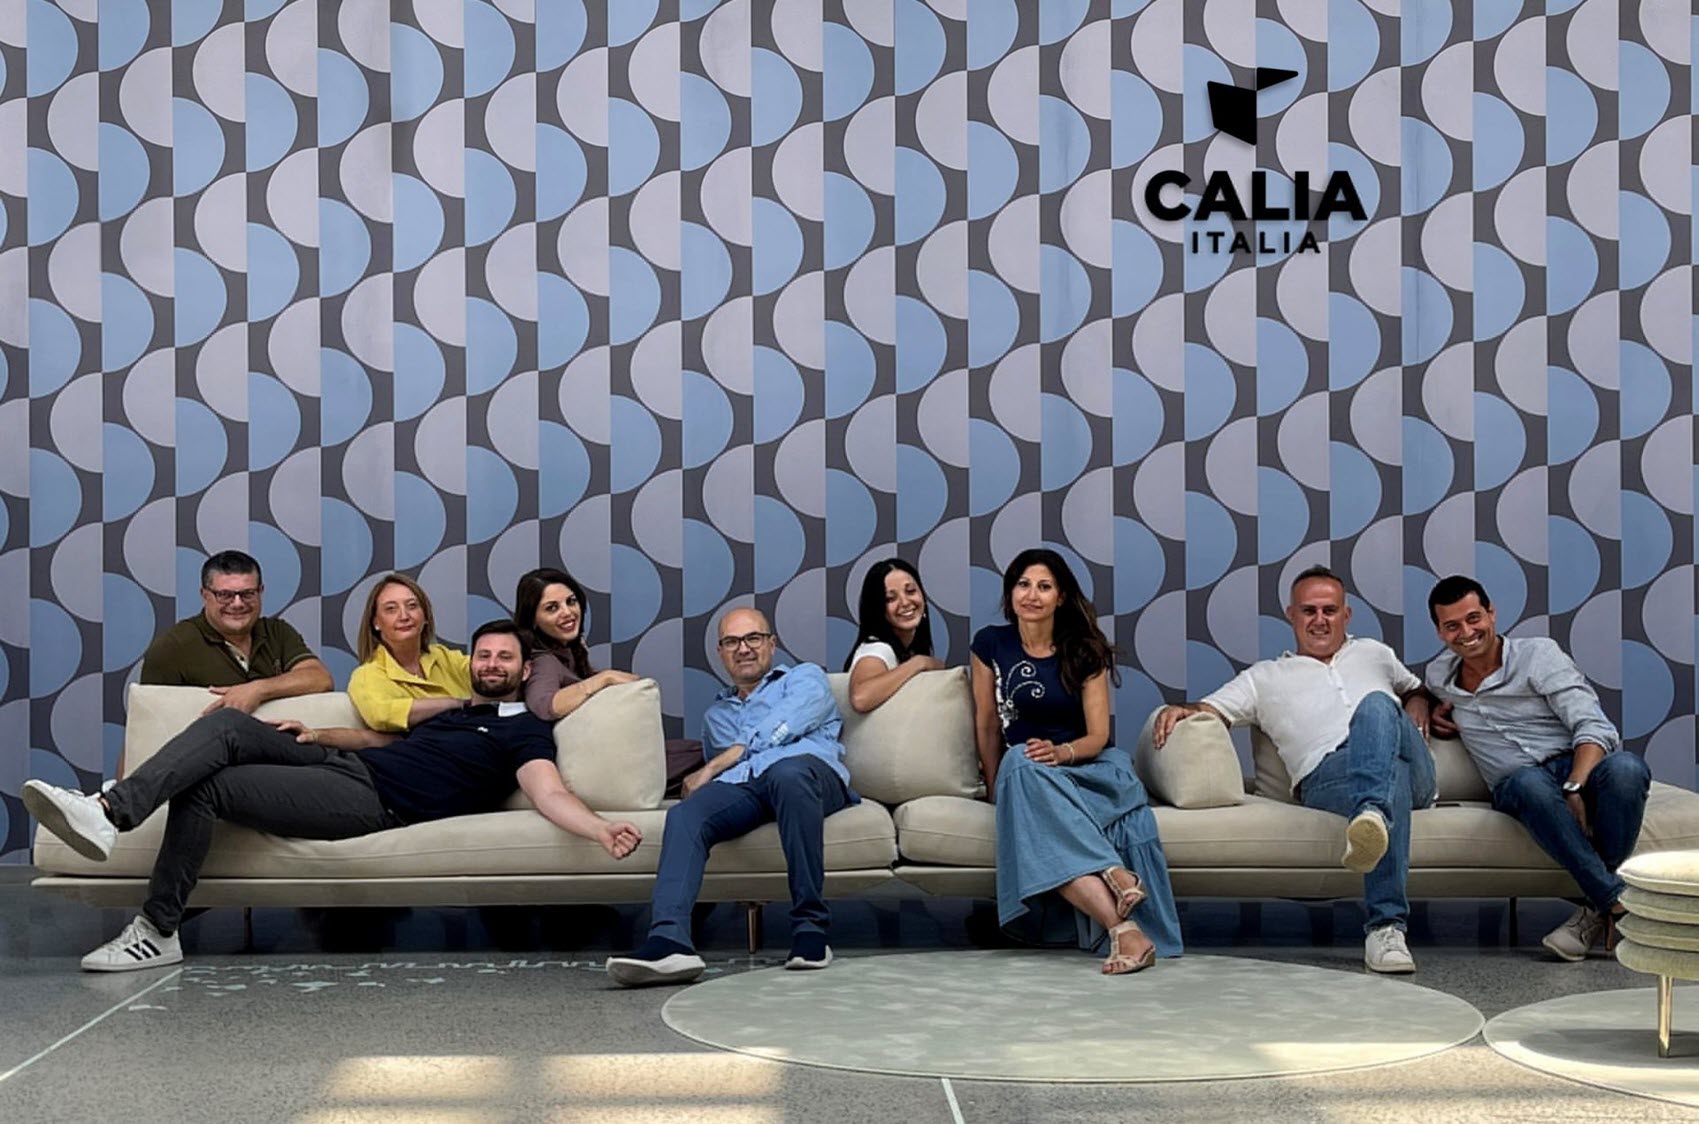 A group of eight Calia Italia staff sitting on a sofa in front of a wall with the Calia Italia logo.